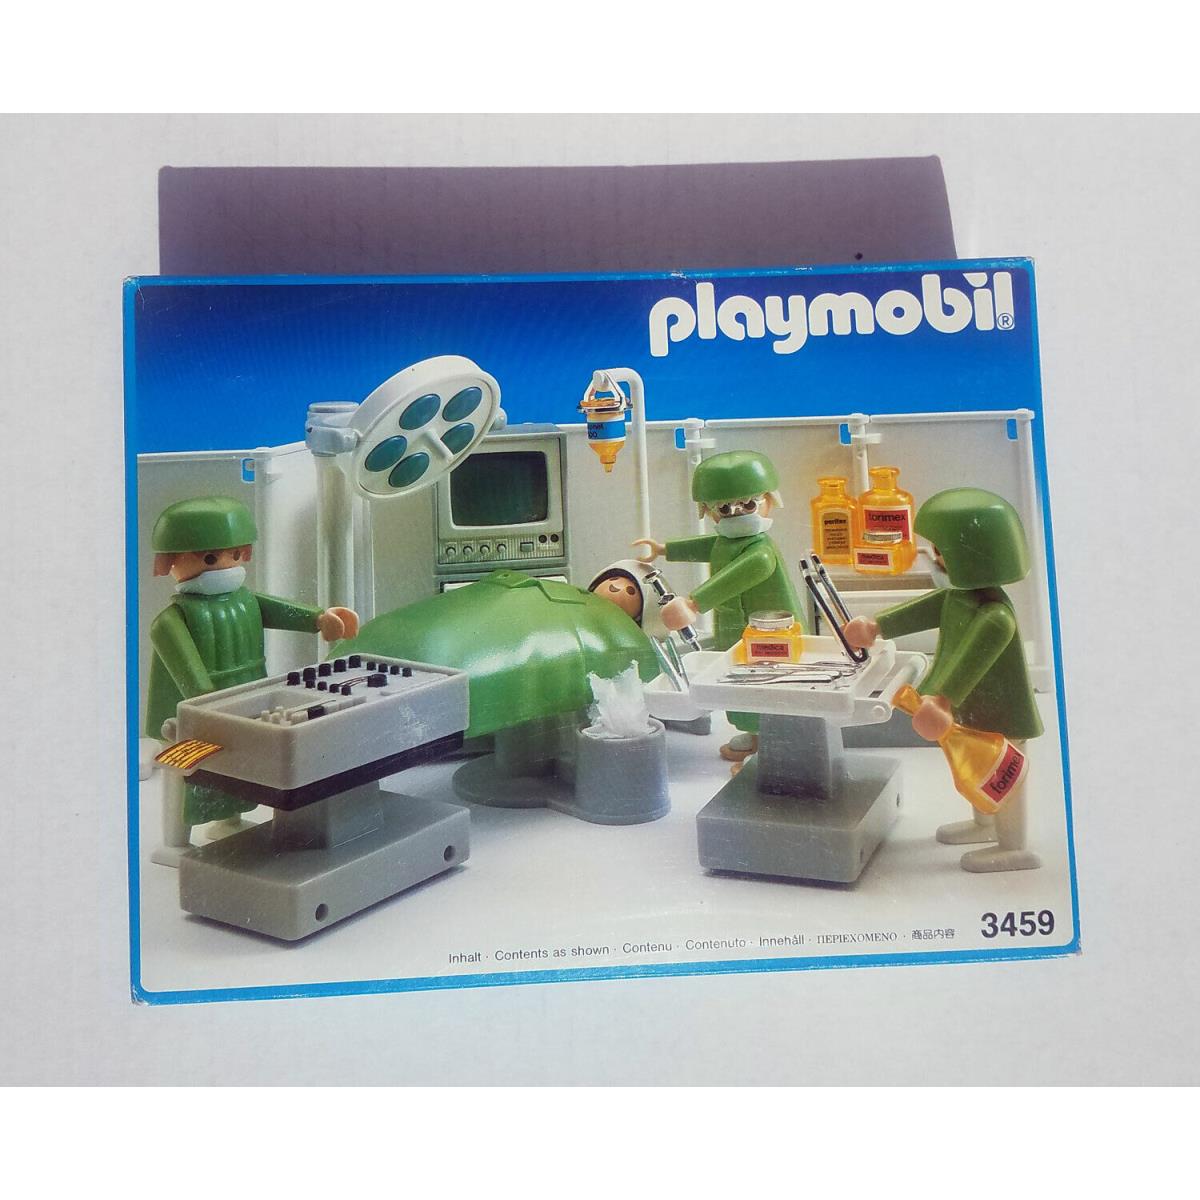 Playmobil 3459 Operating Room 1992 Rare Collectors Item